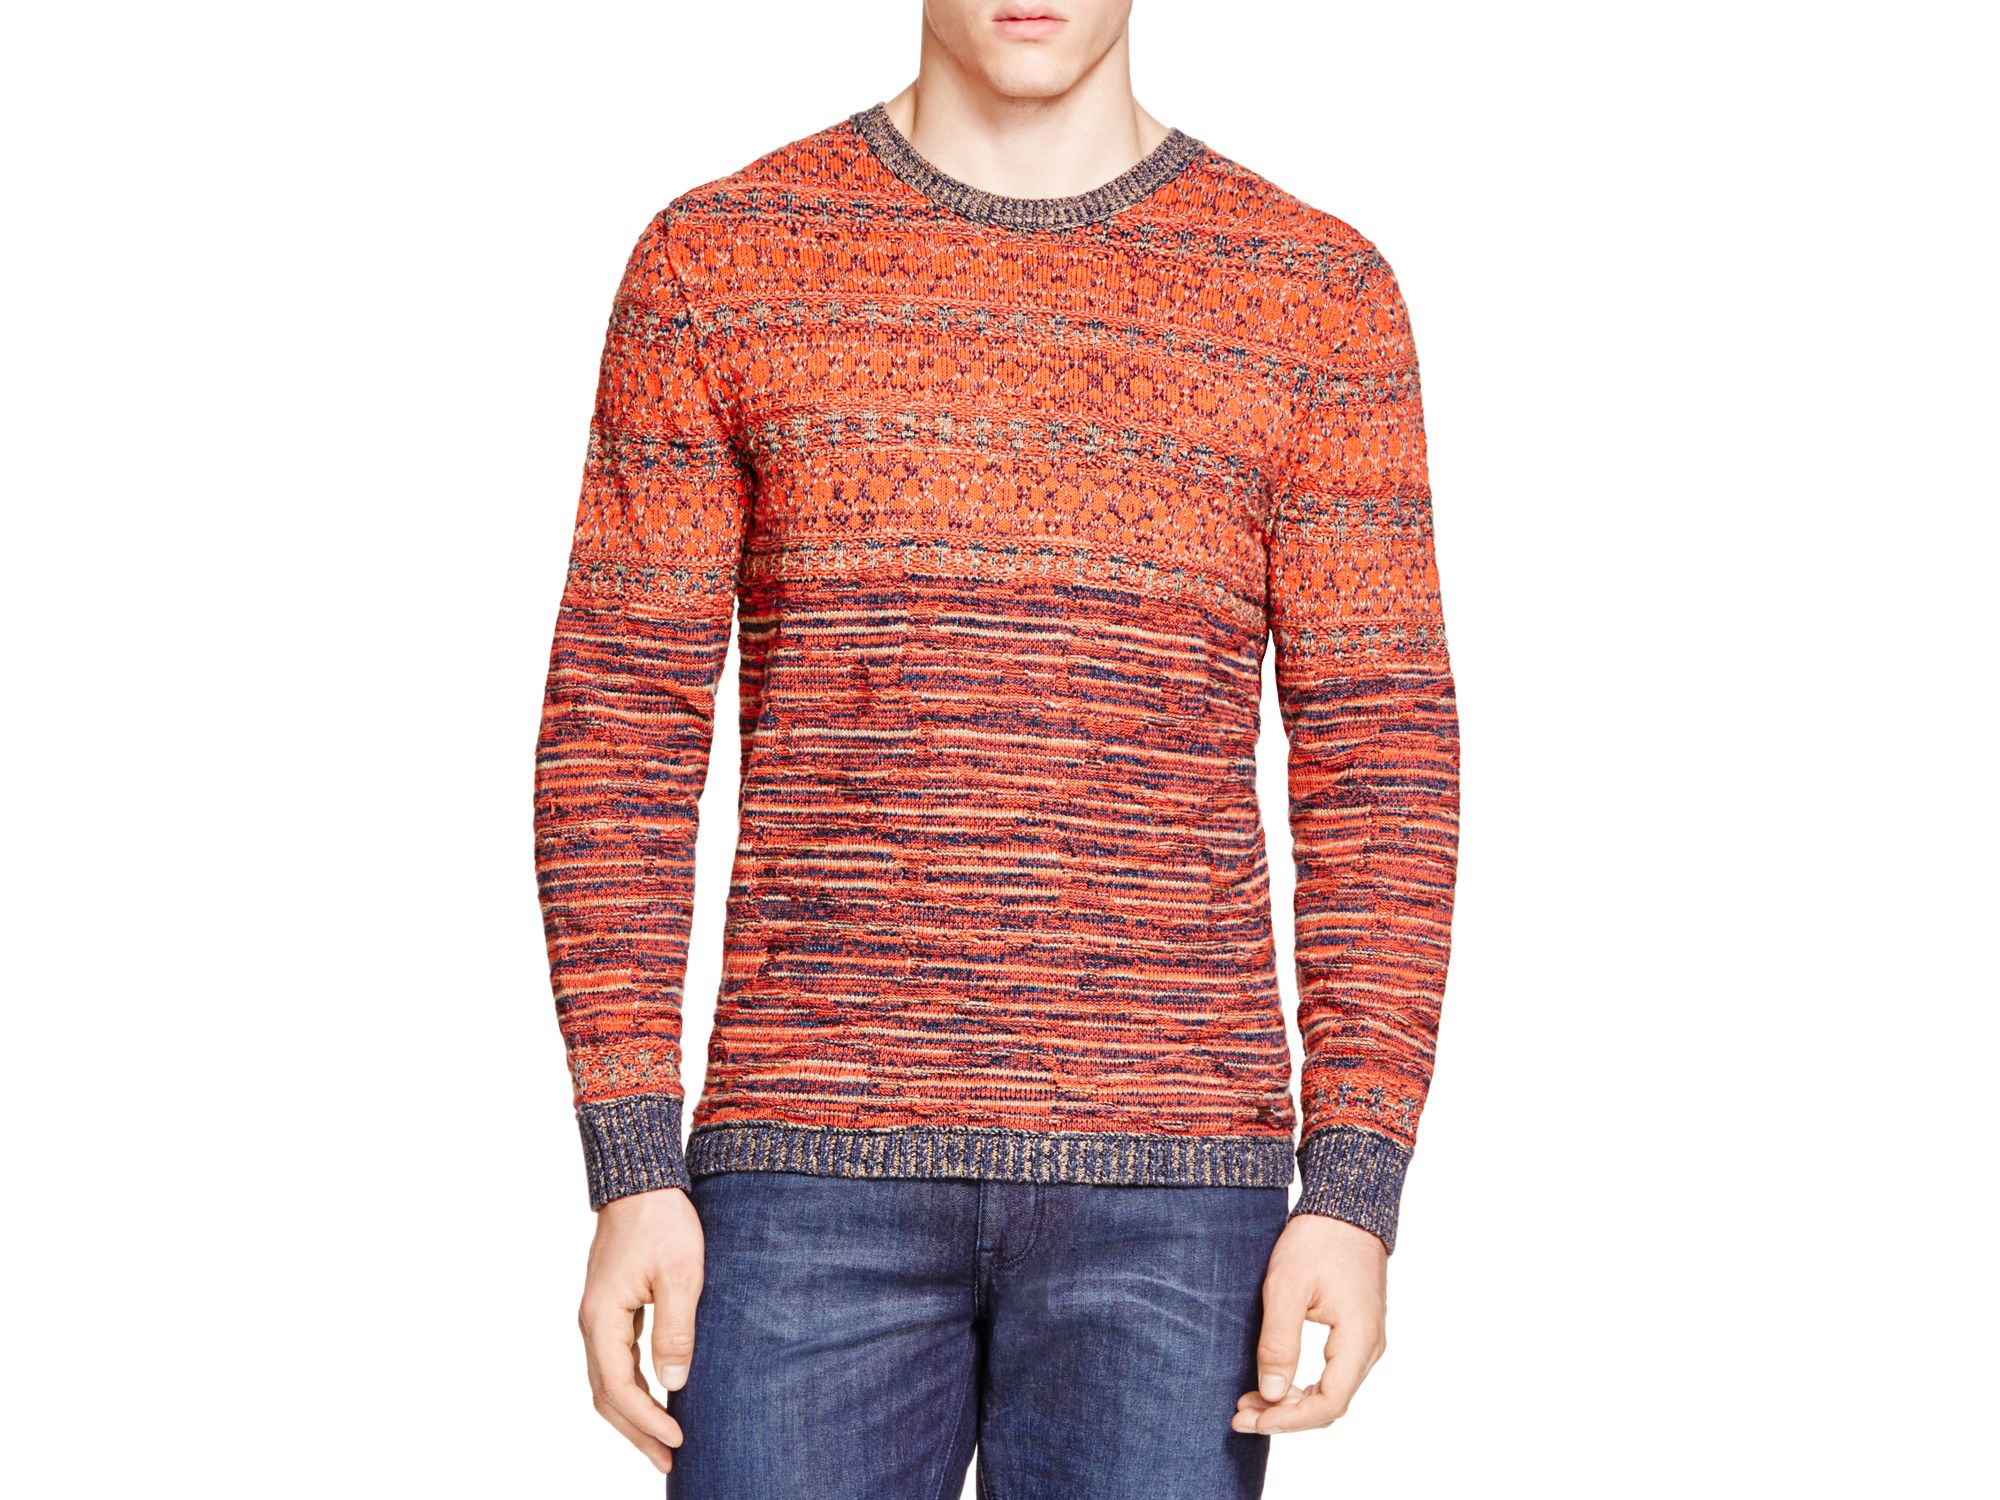 Hugo Boss Orange Sweater Italy, SAVE 56% - fearthemecca.com